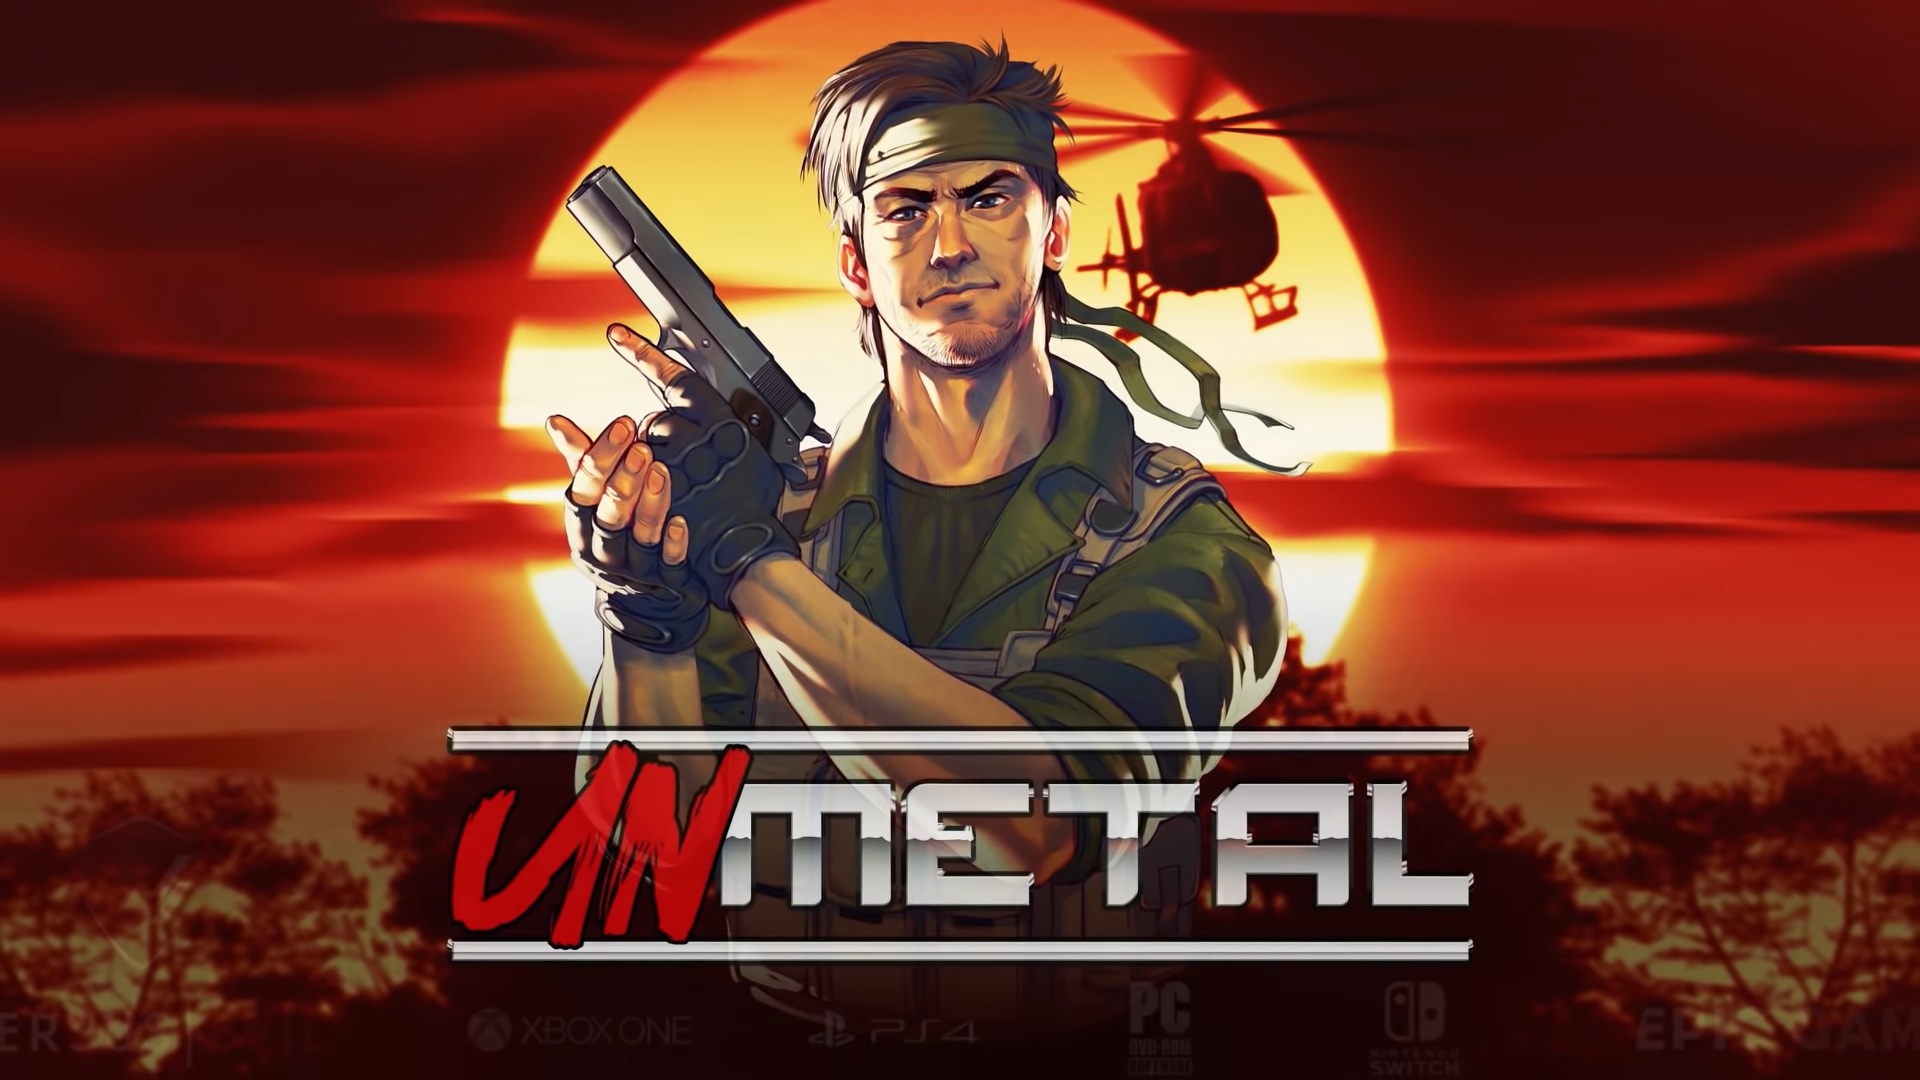 UnMetal, the spiritual successor to the original Metal Gear